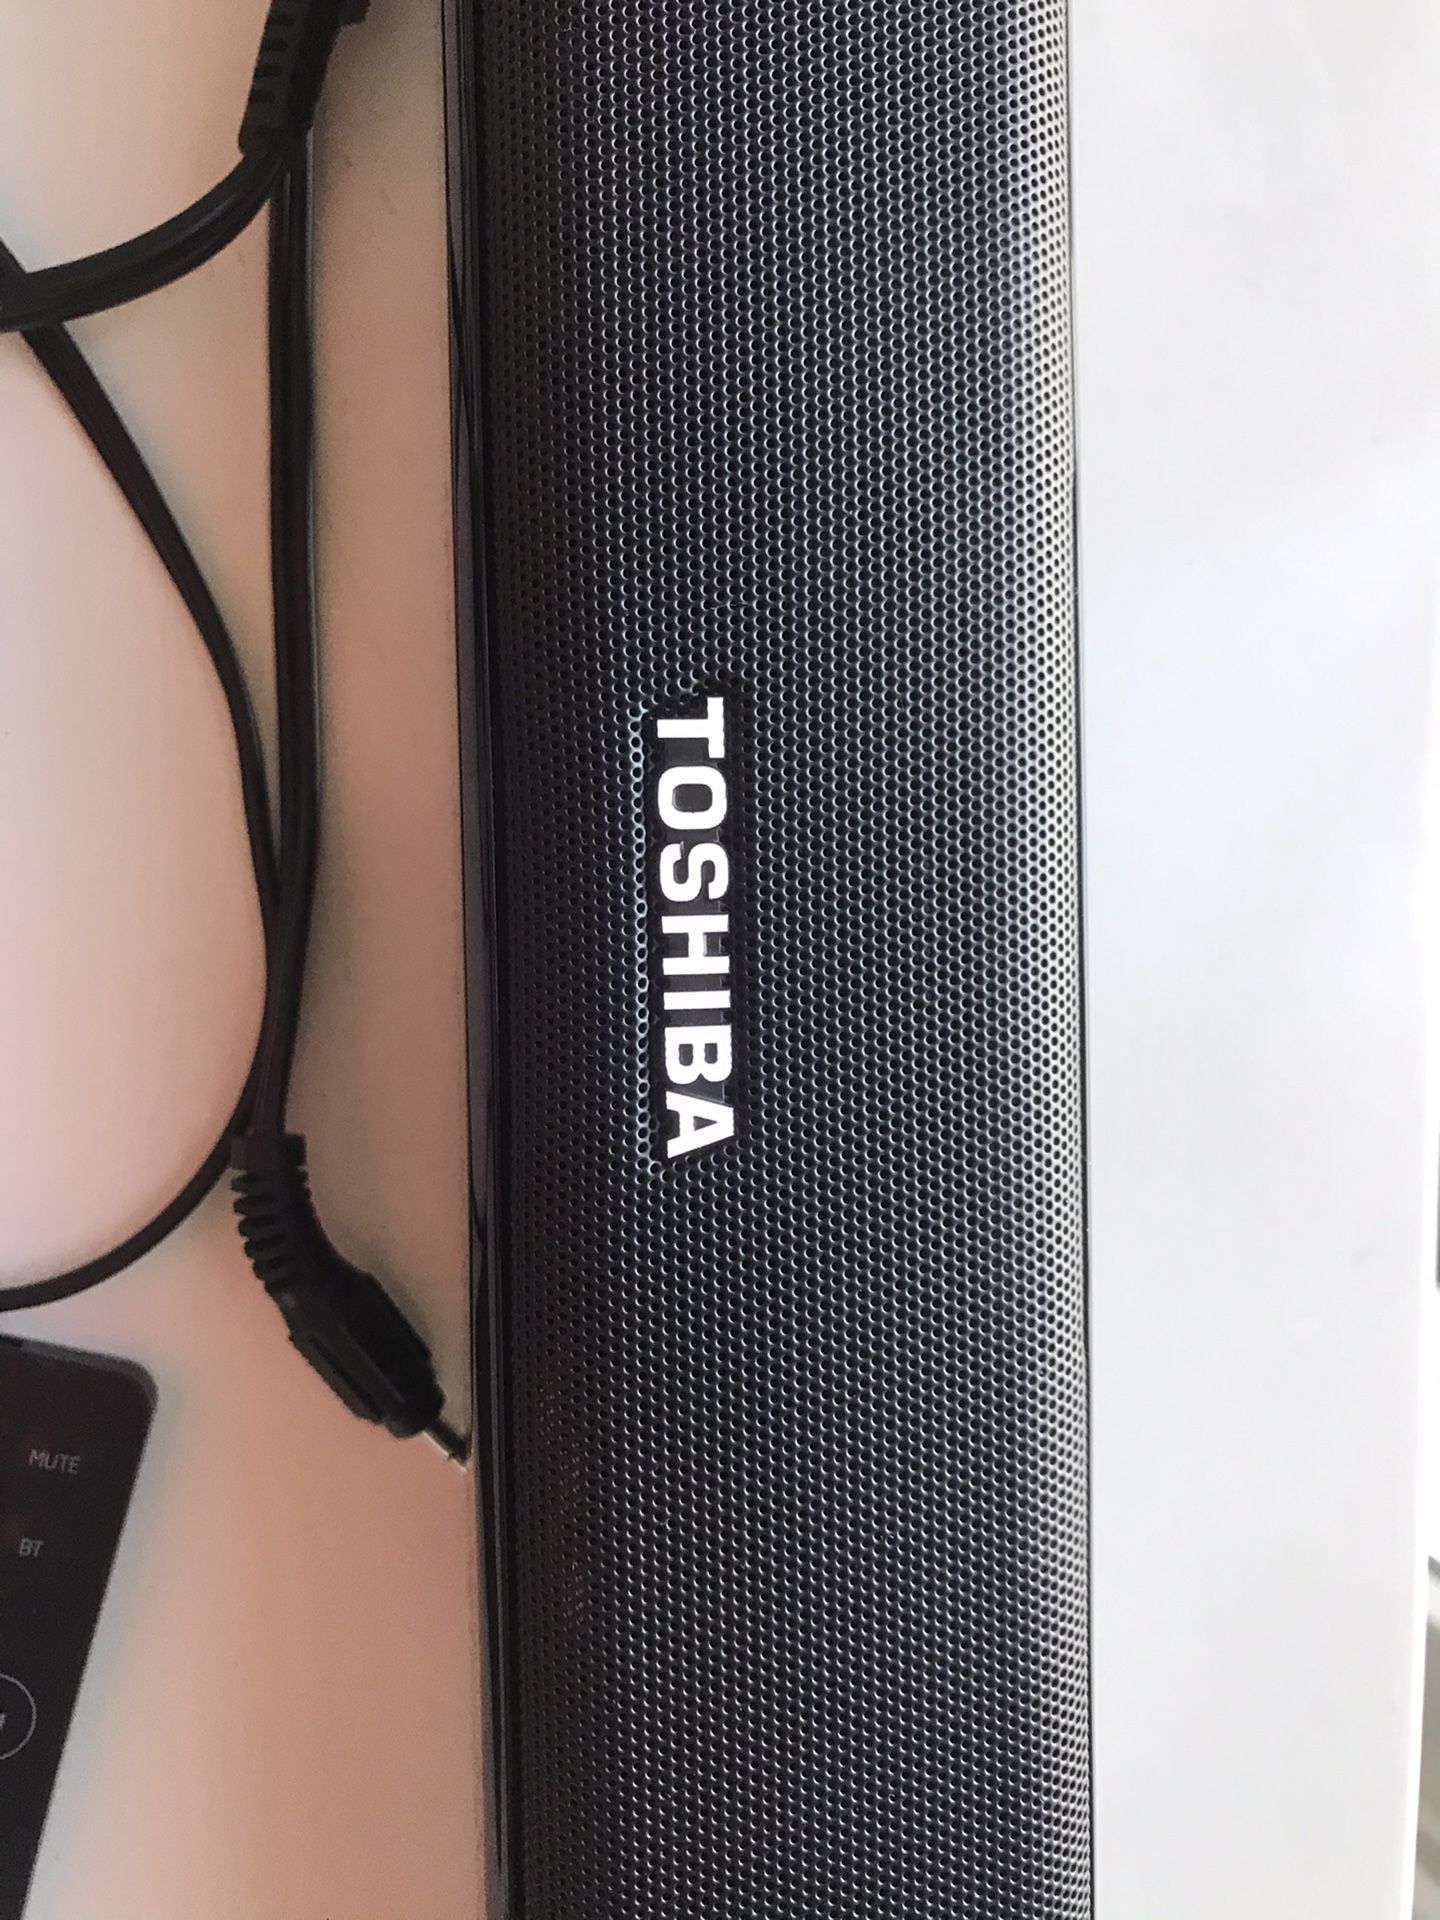 Toshiba sound bar for TV or PC. $40